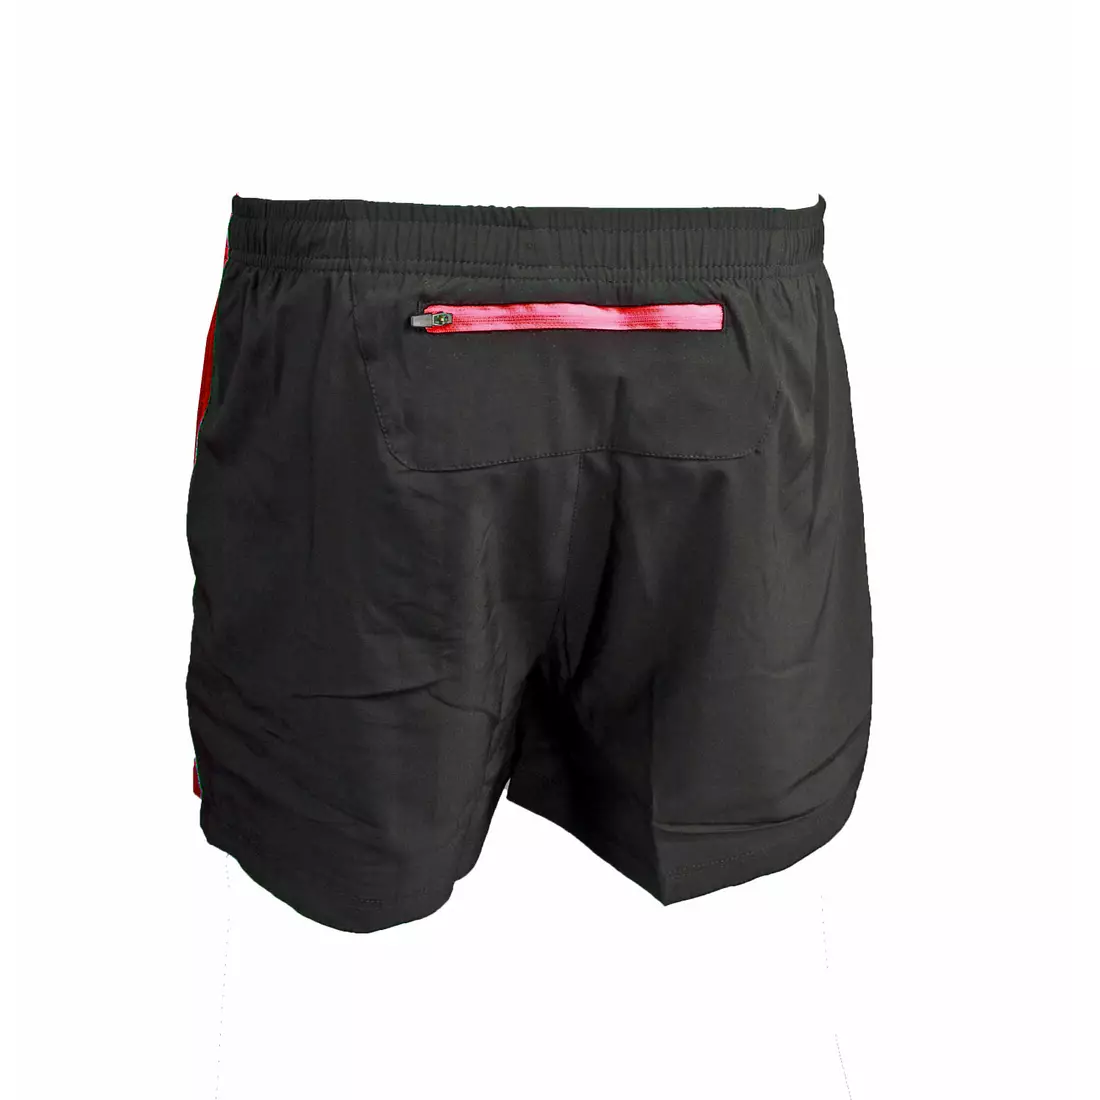 ROGELLI RUN TARANTO loose running shorts, black and red